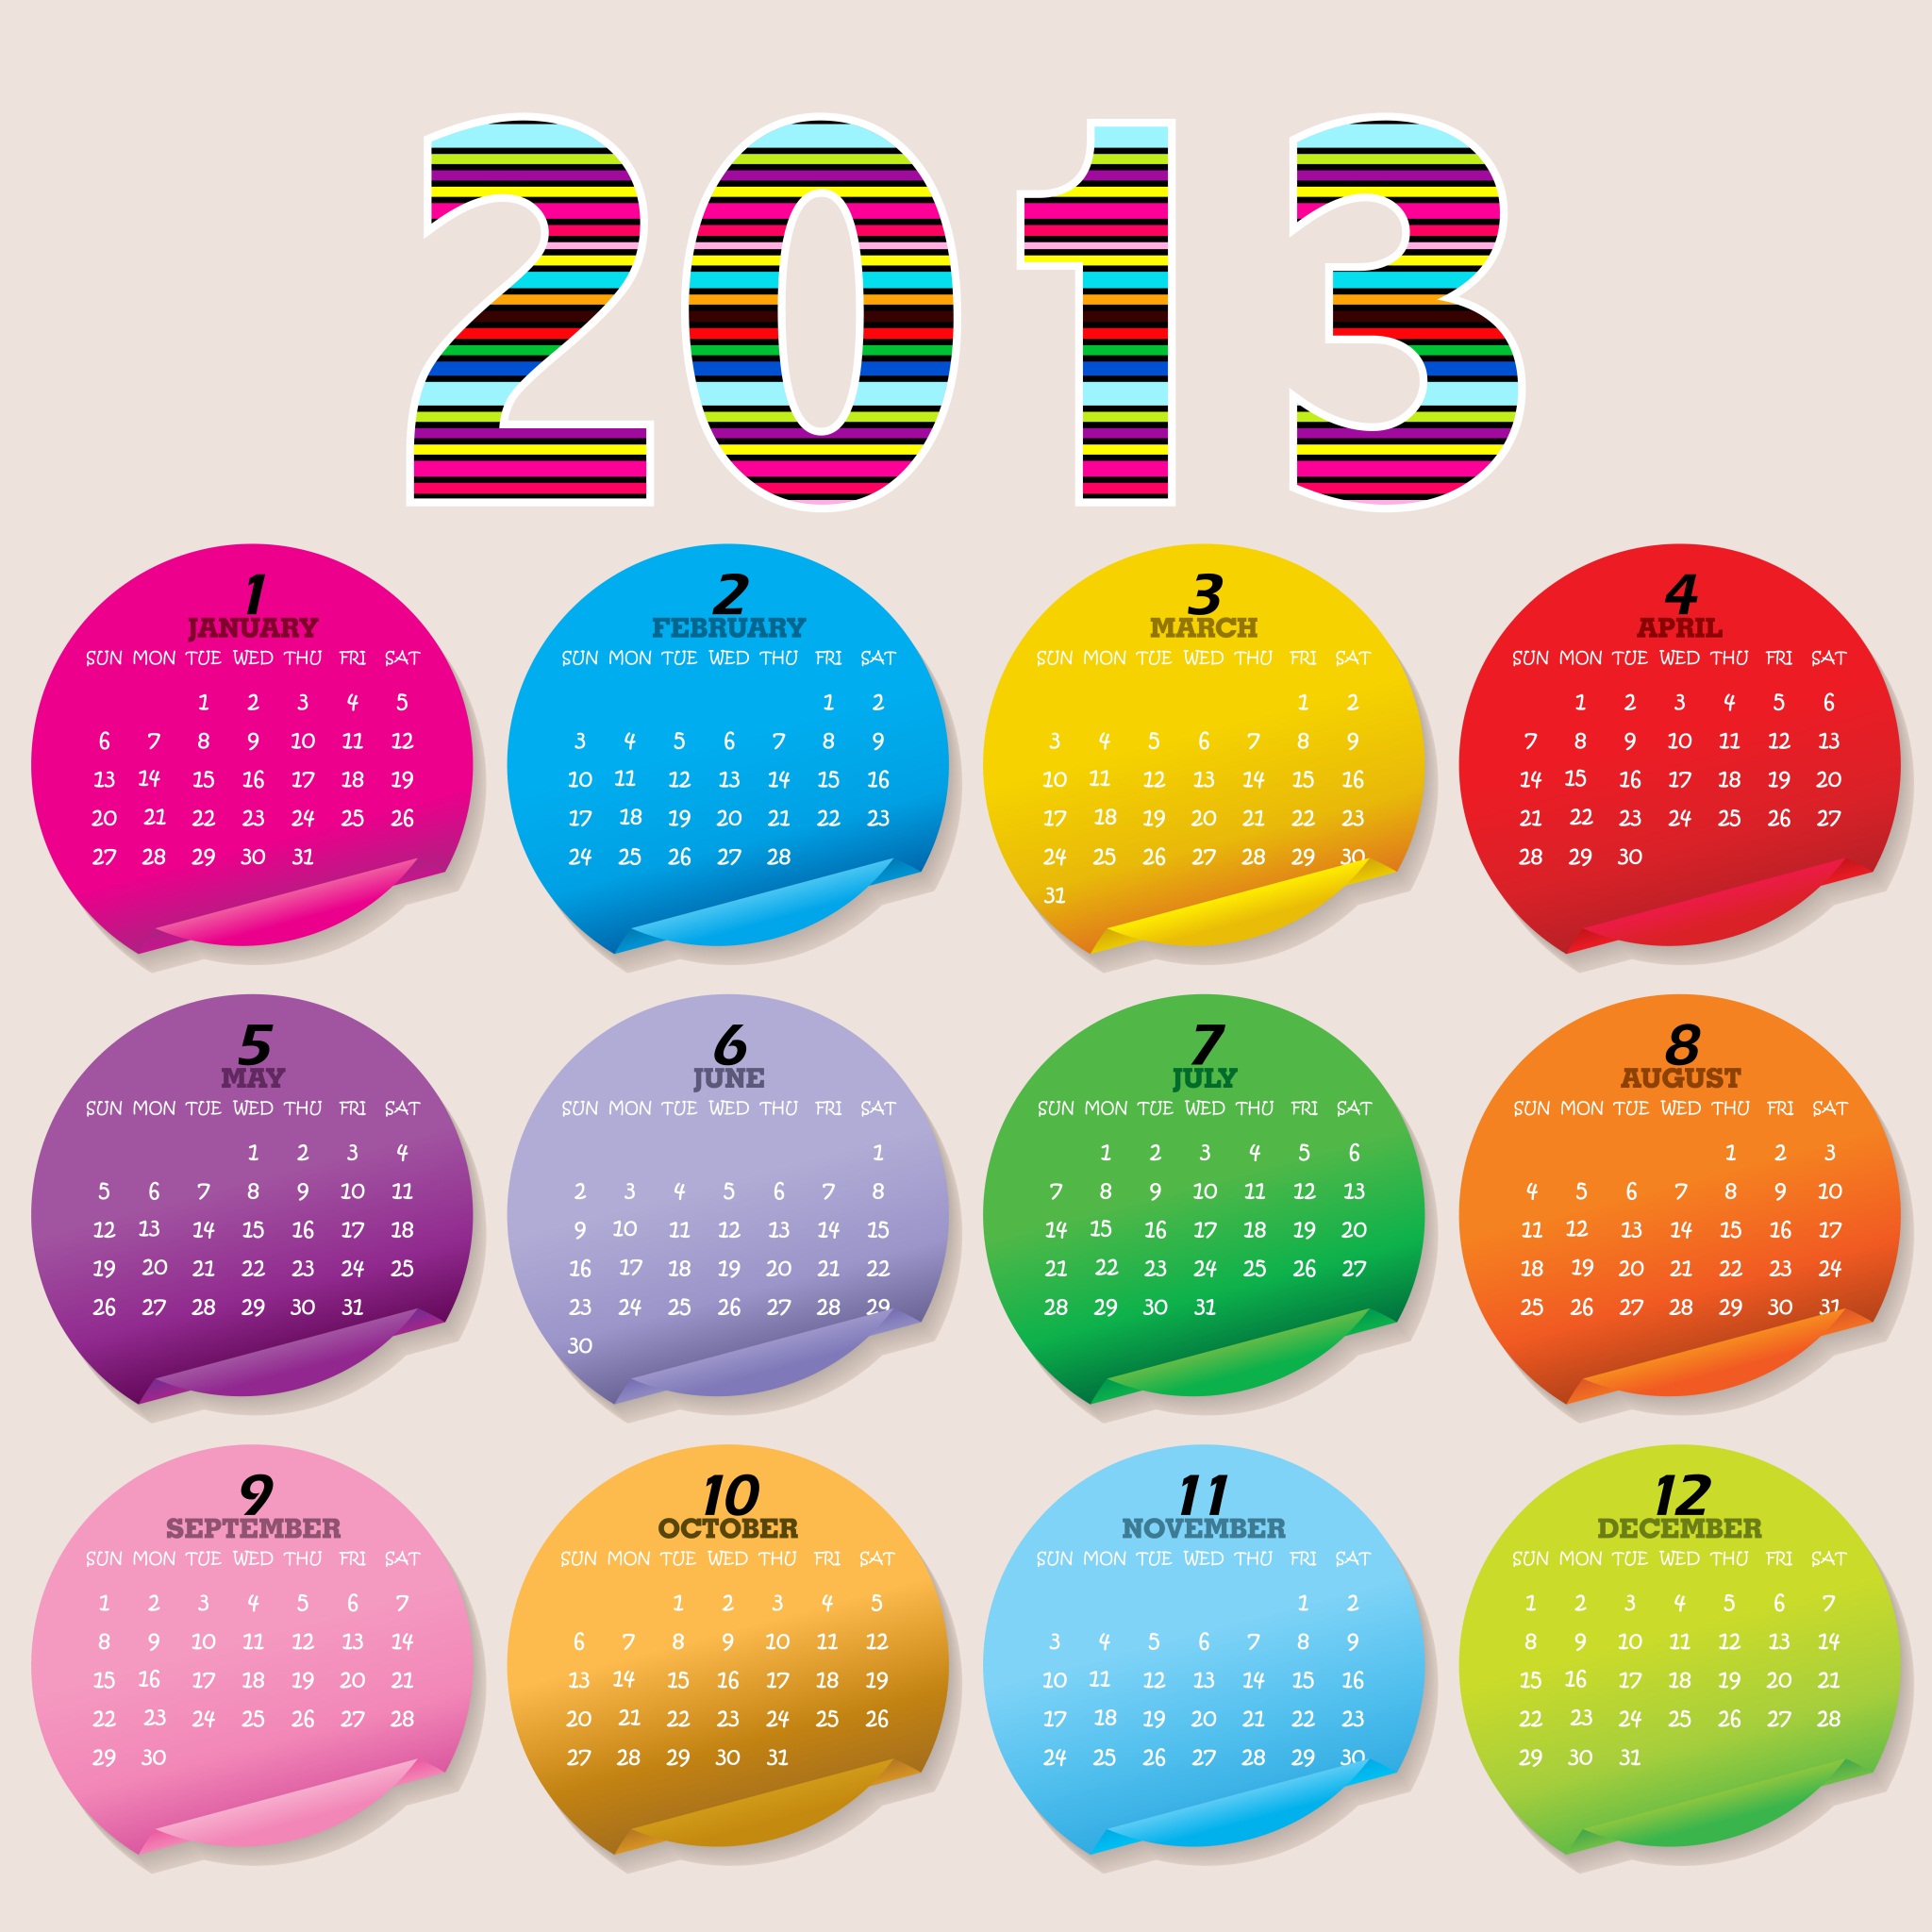 2013 Calendar   Wallpapers Pictures Pics Photos Images Desktop